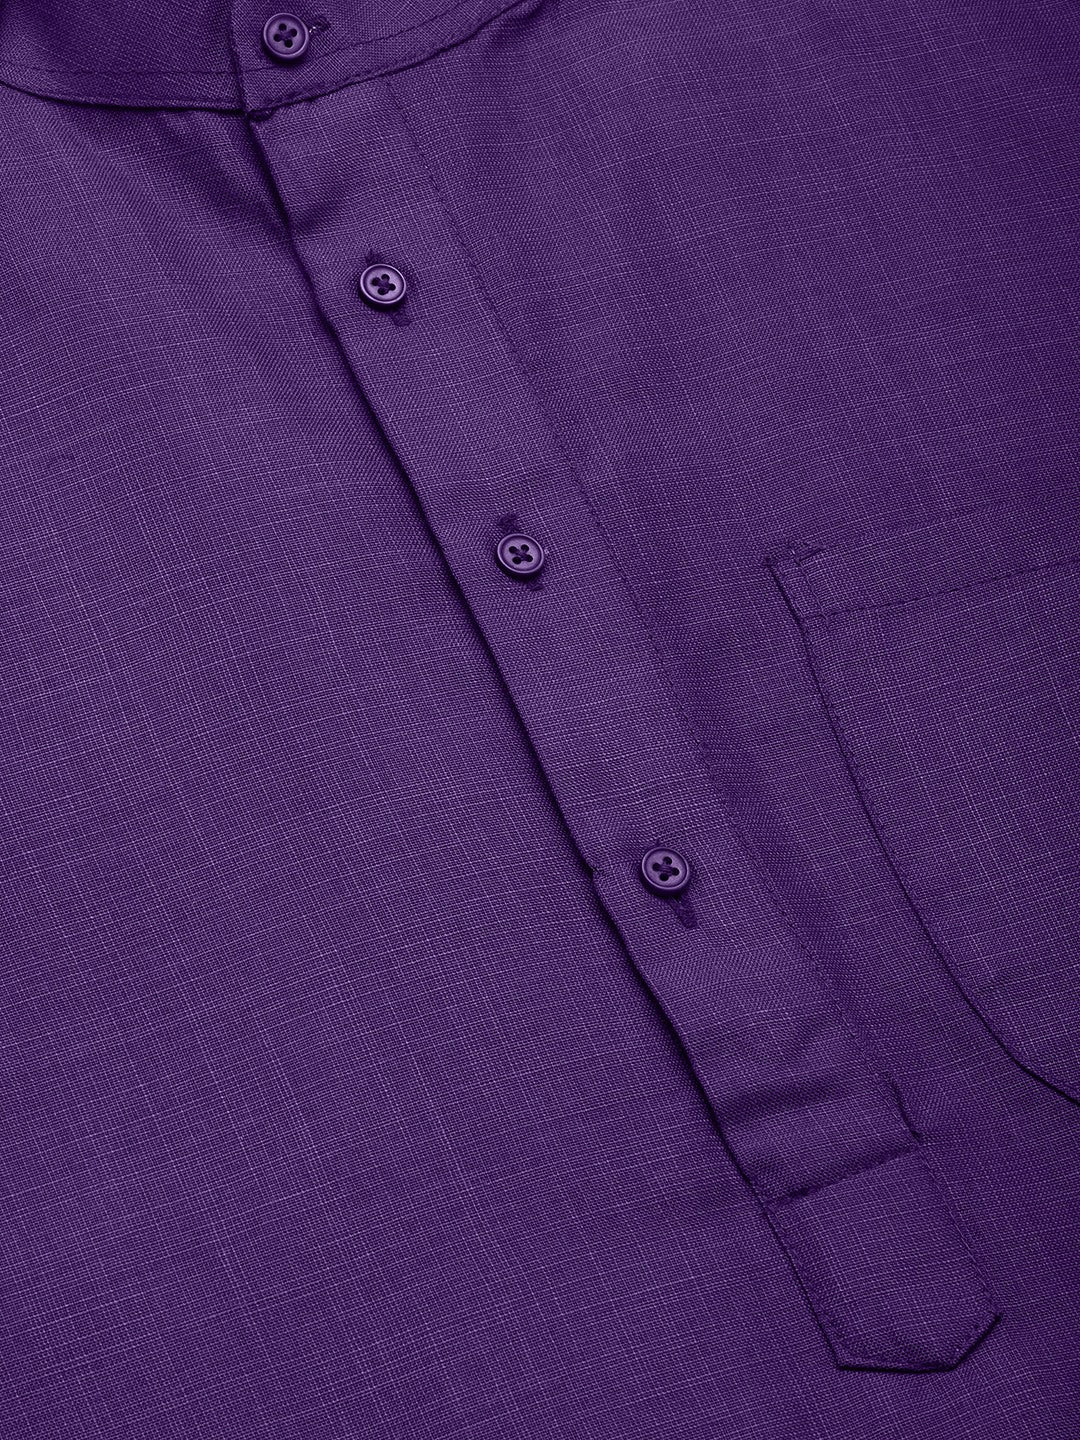 Jompers Men's Purple Cotton Solid Kurta Only